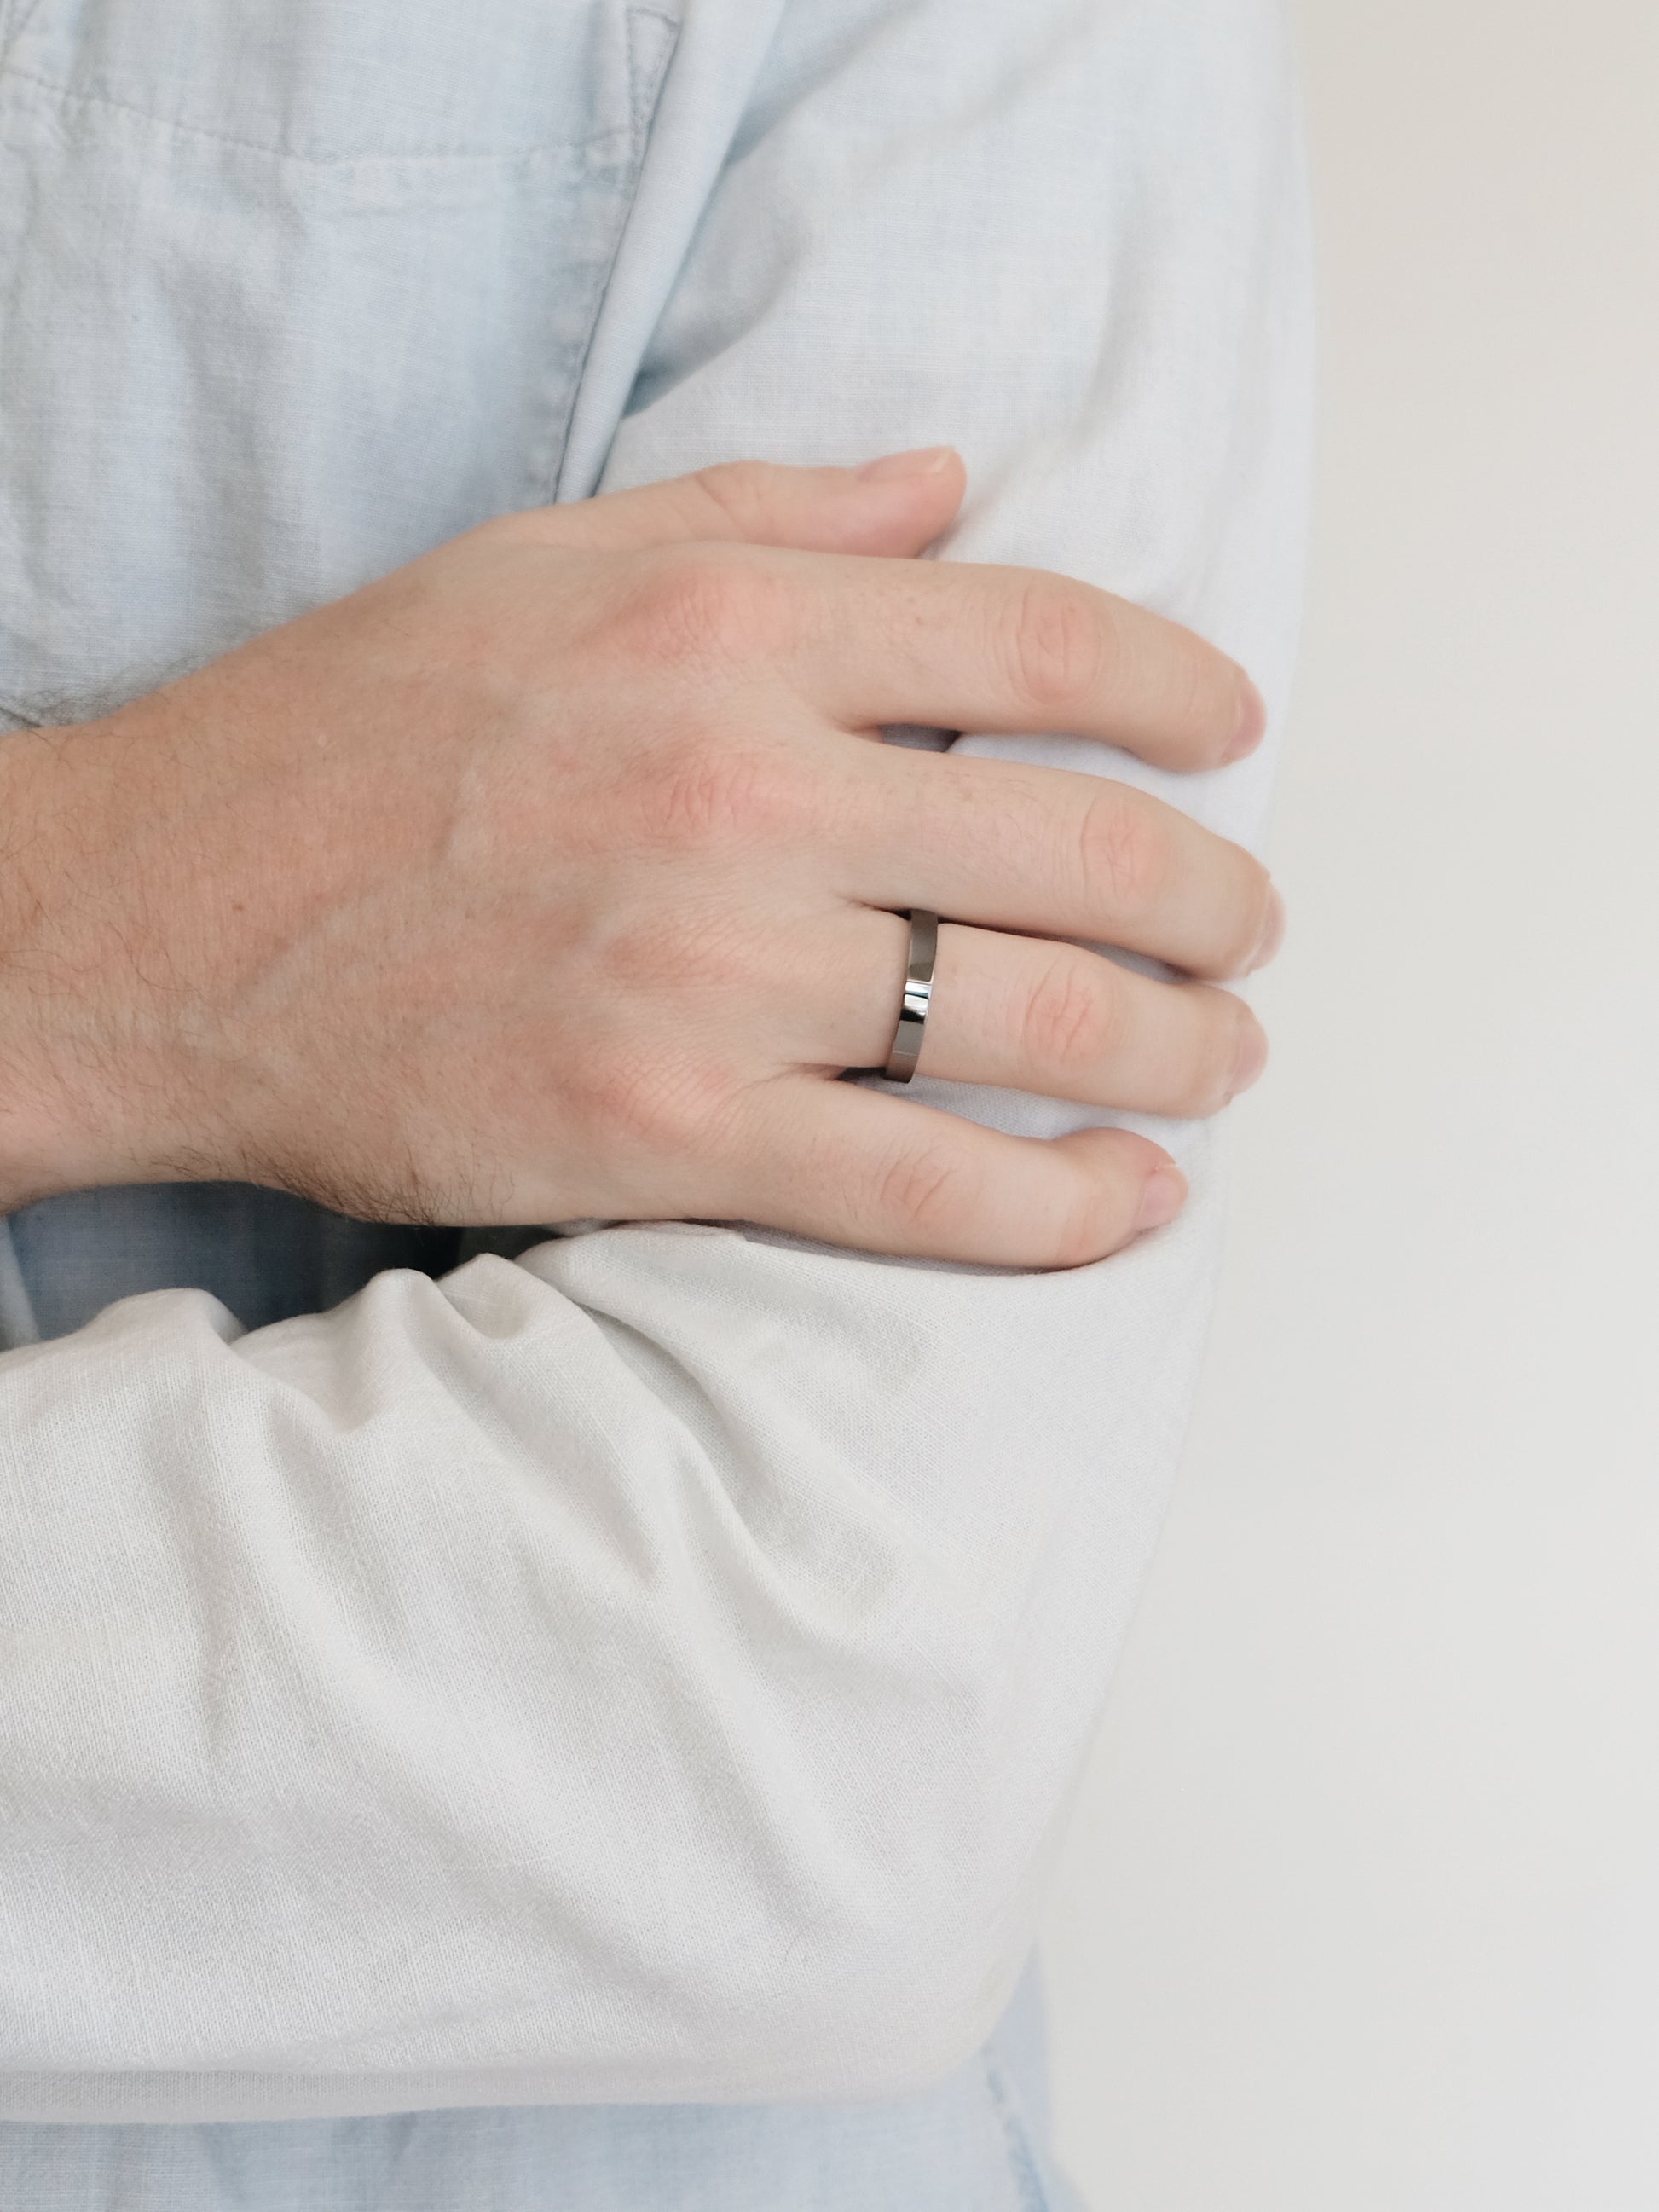 Wearing The Minimalist Ring | Grey